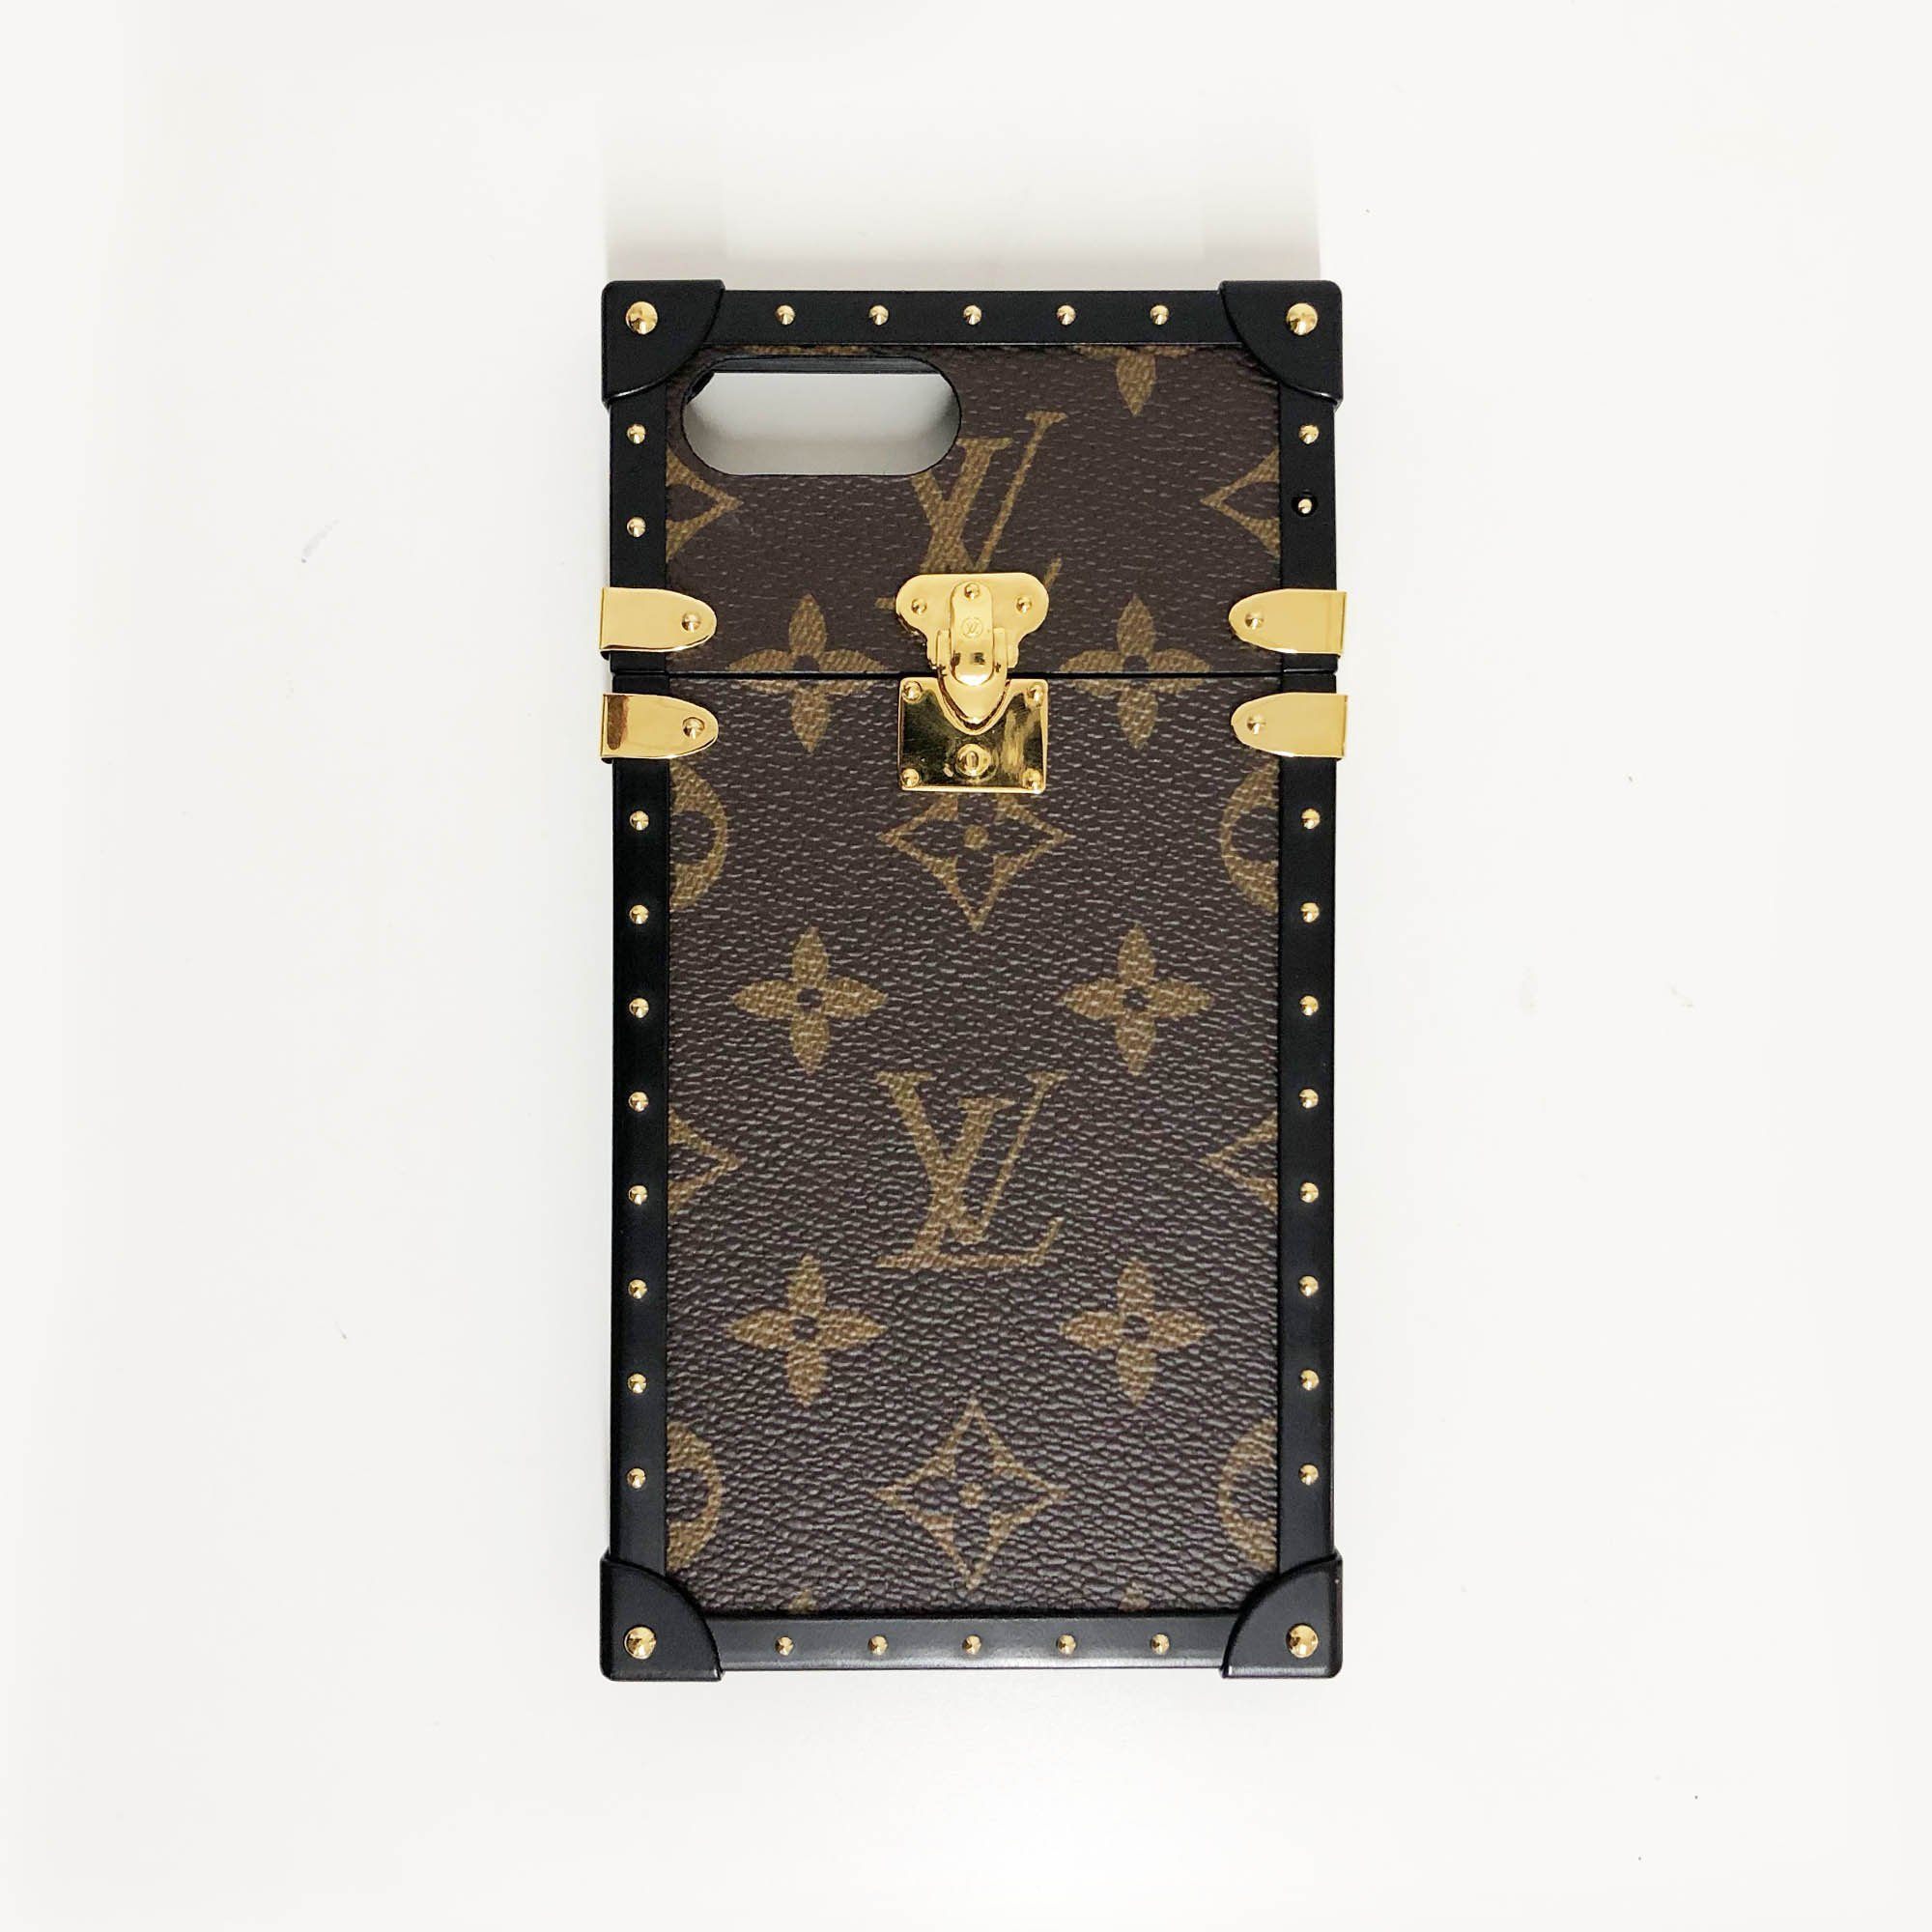  Louis  Vuitton  Monogram Eye Trunk iPhone  7 Plus Case  